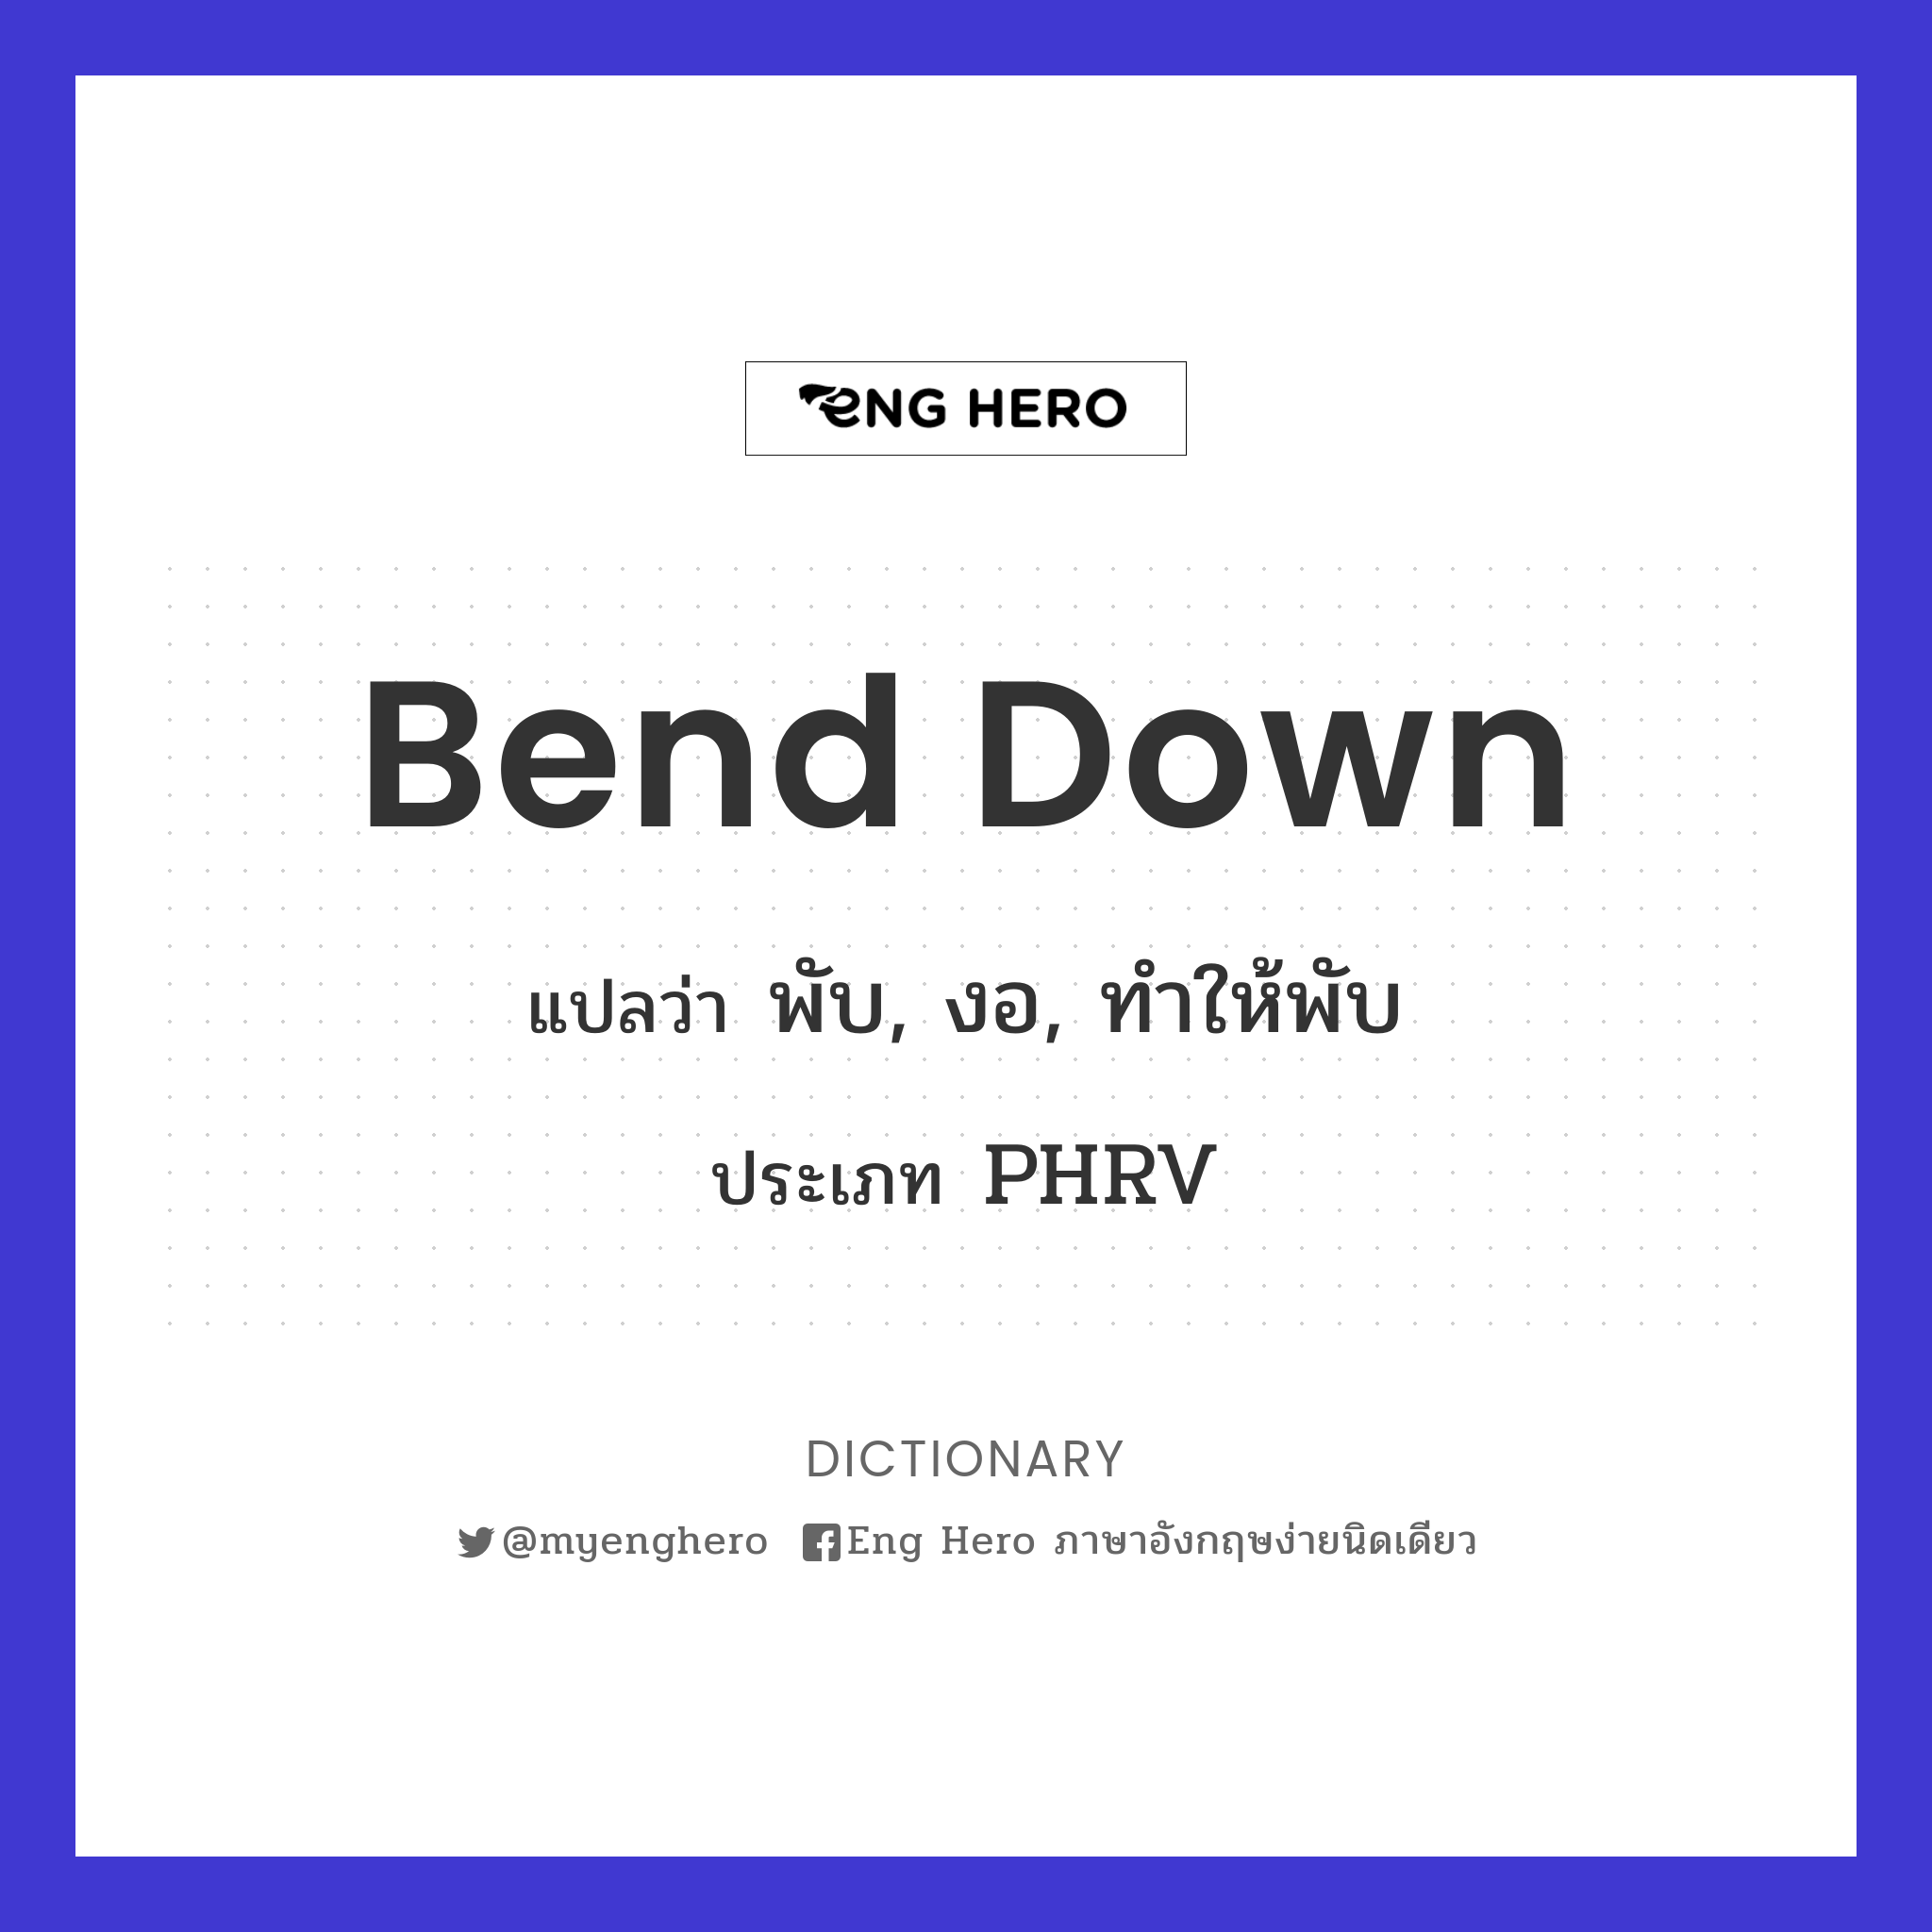 bend down